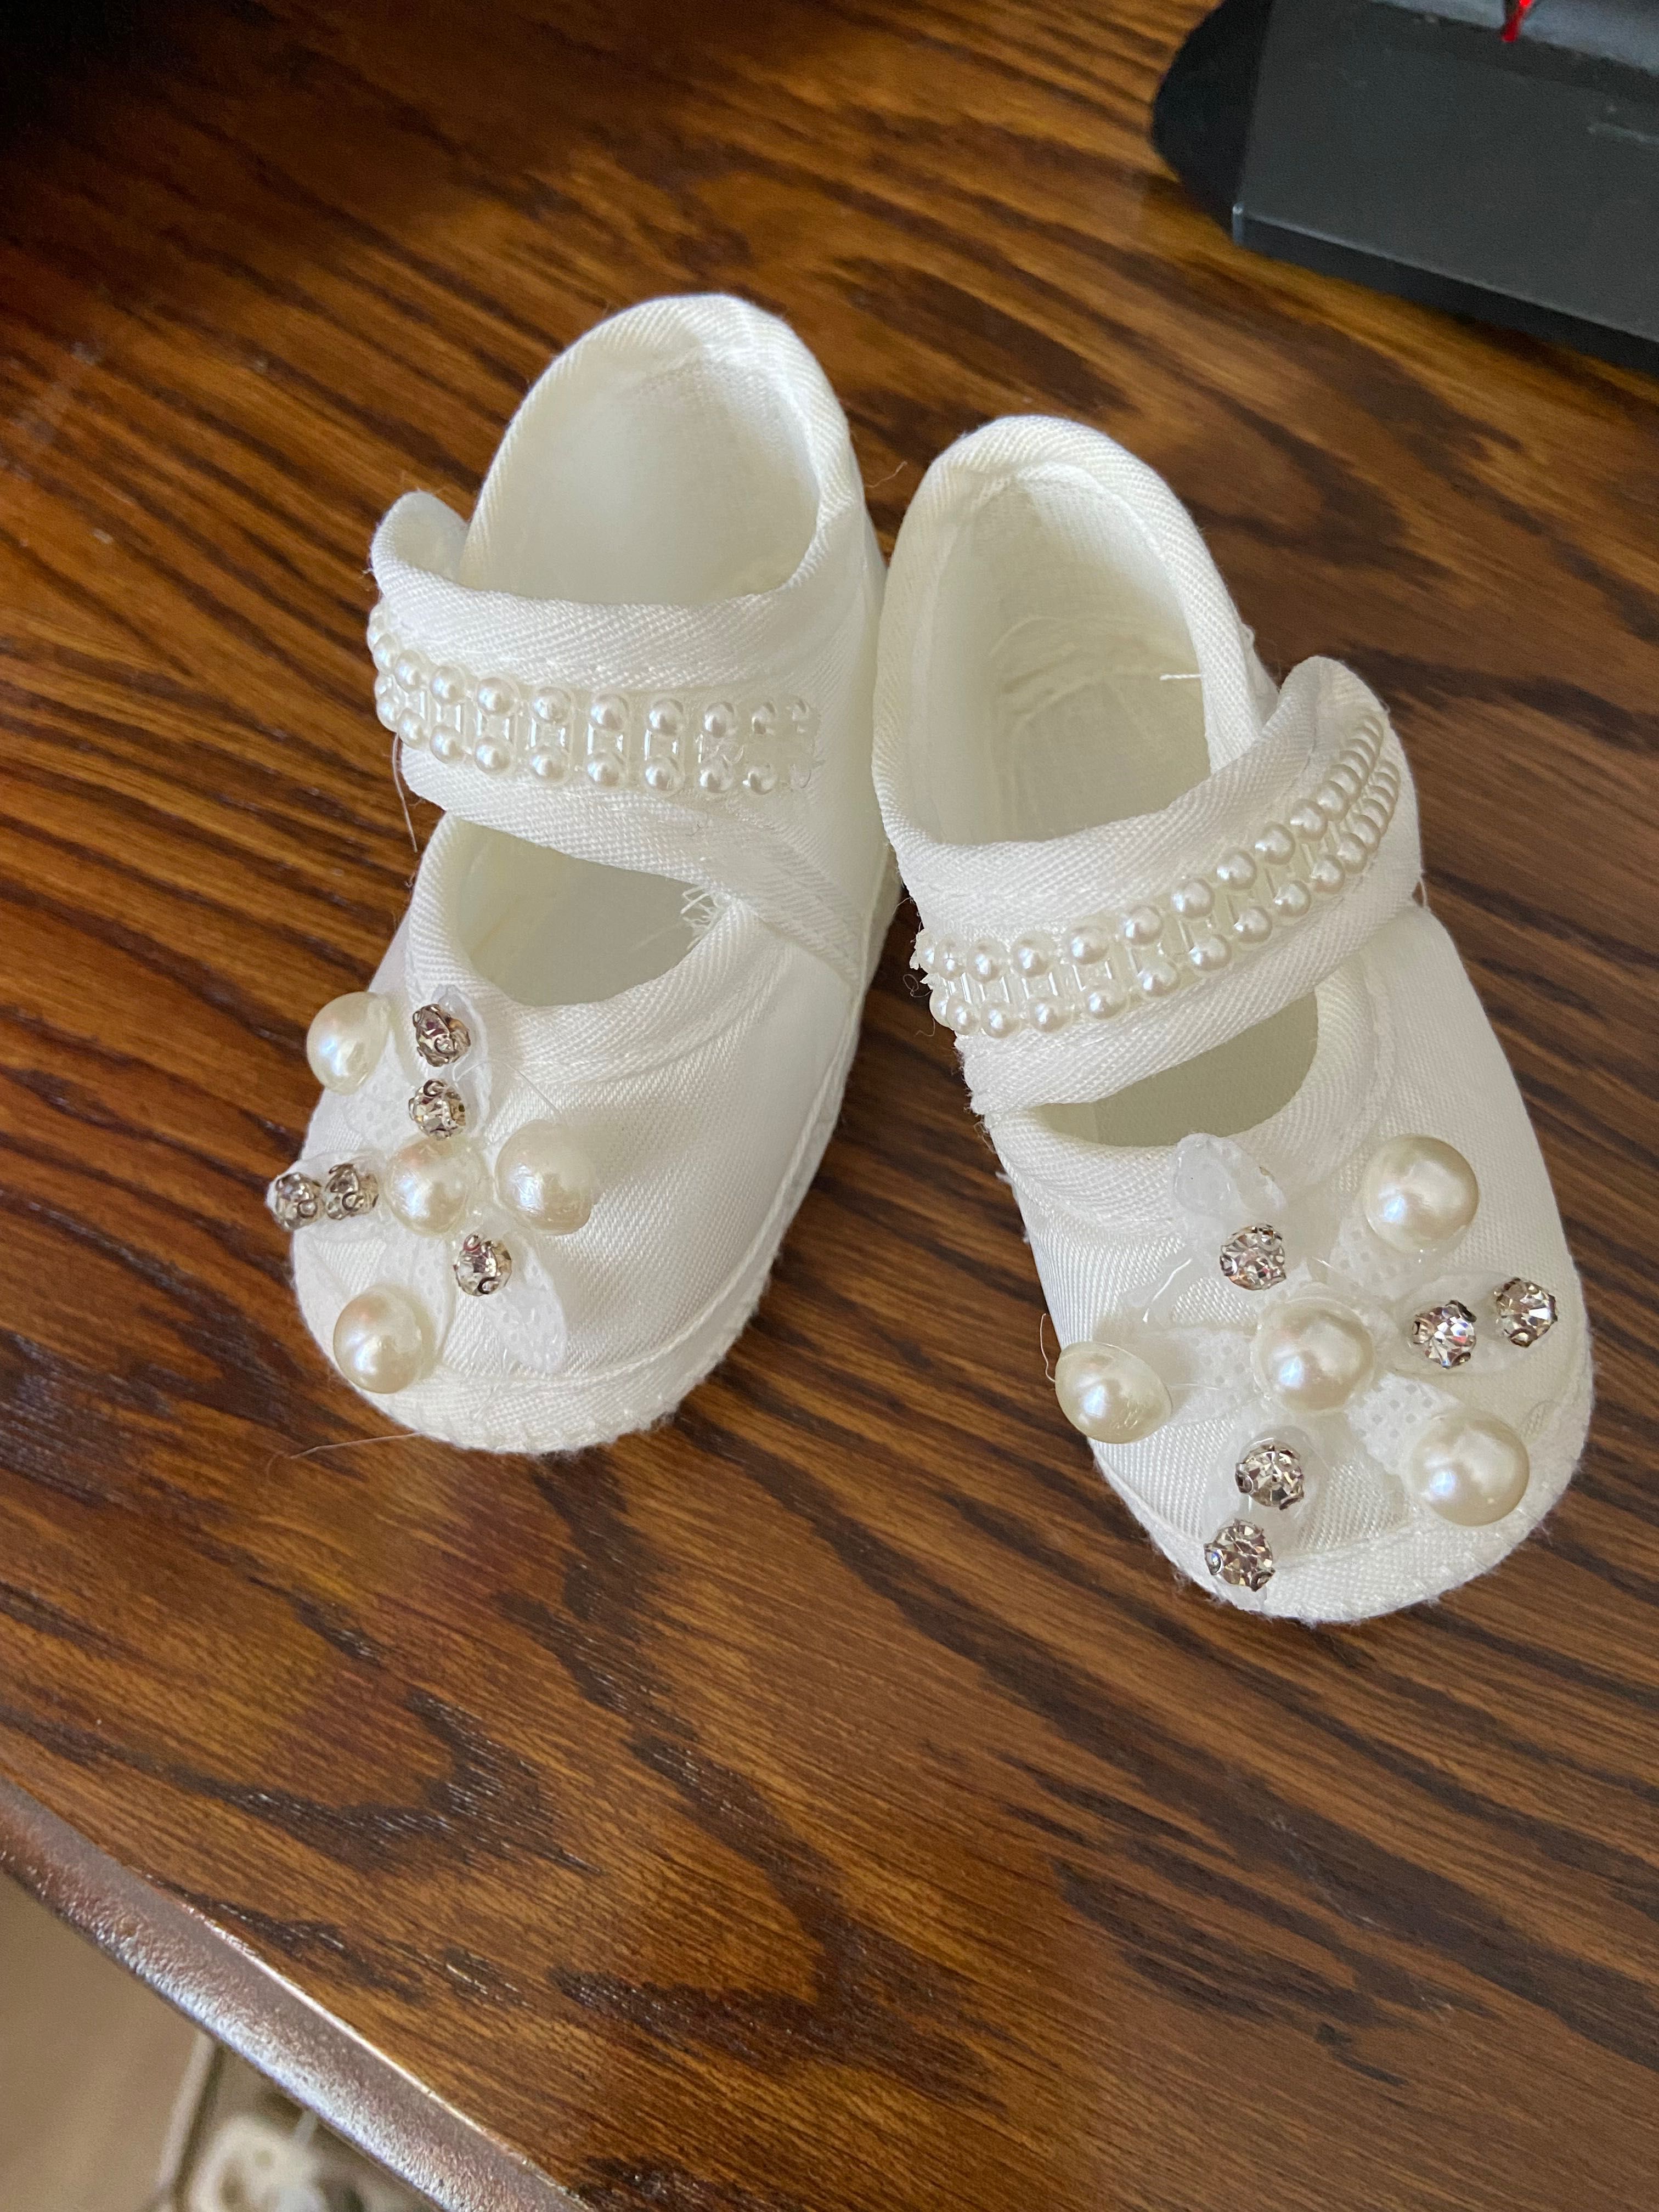 Pantofiori nou nascut + ciorapei